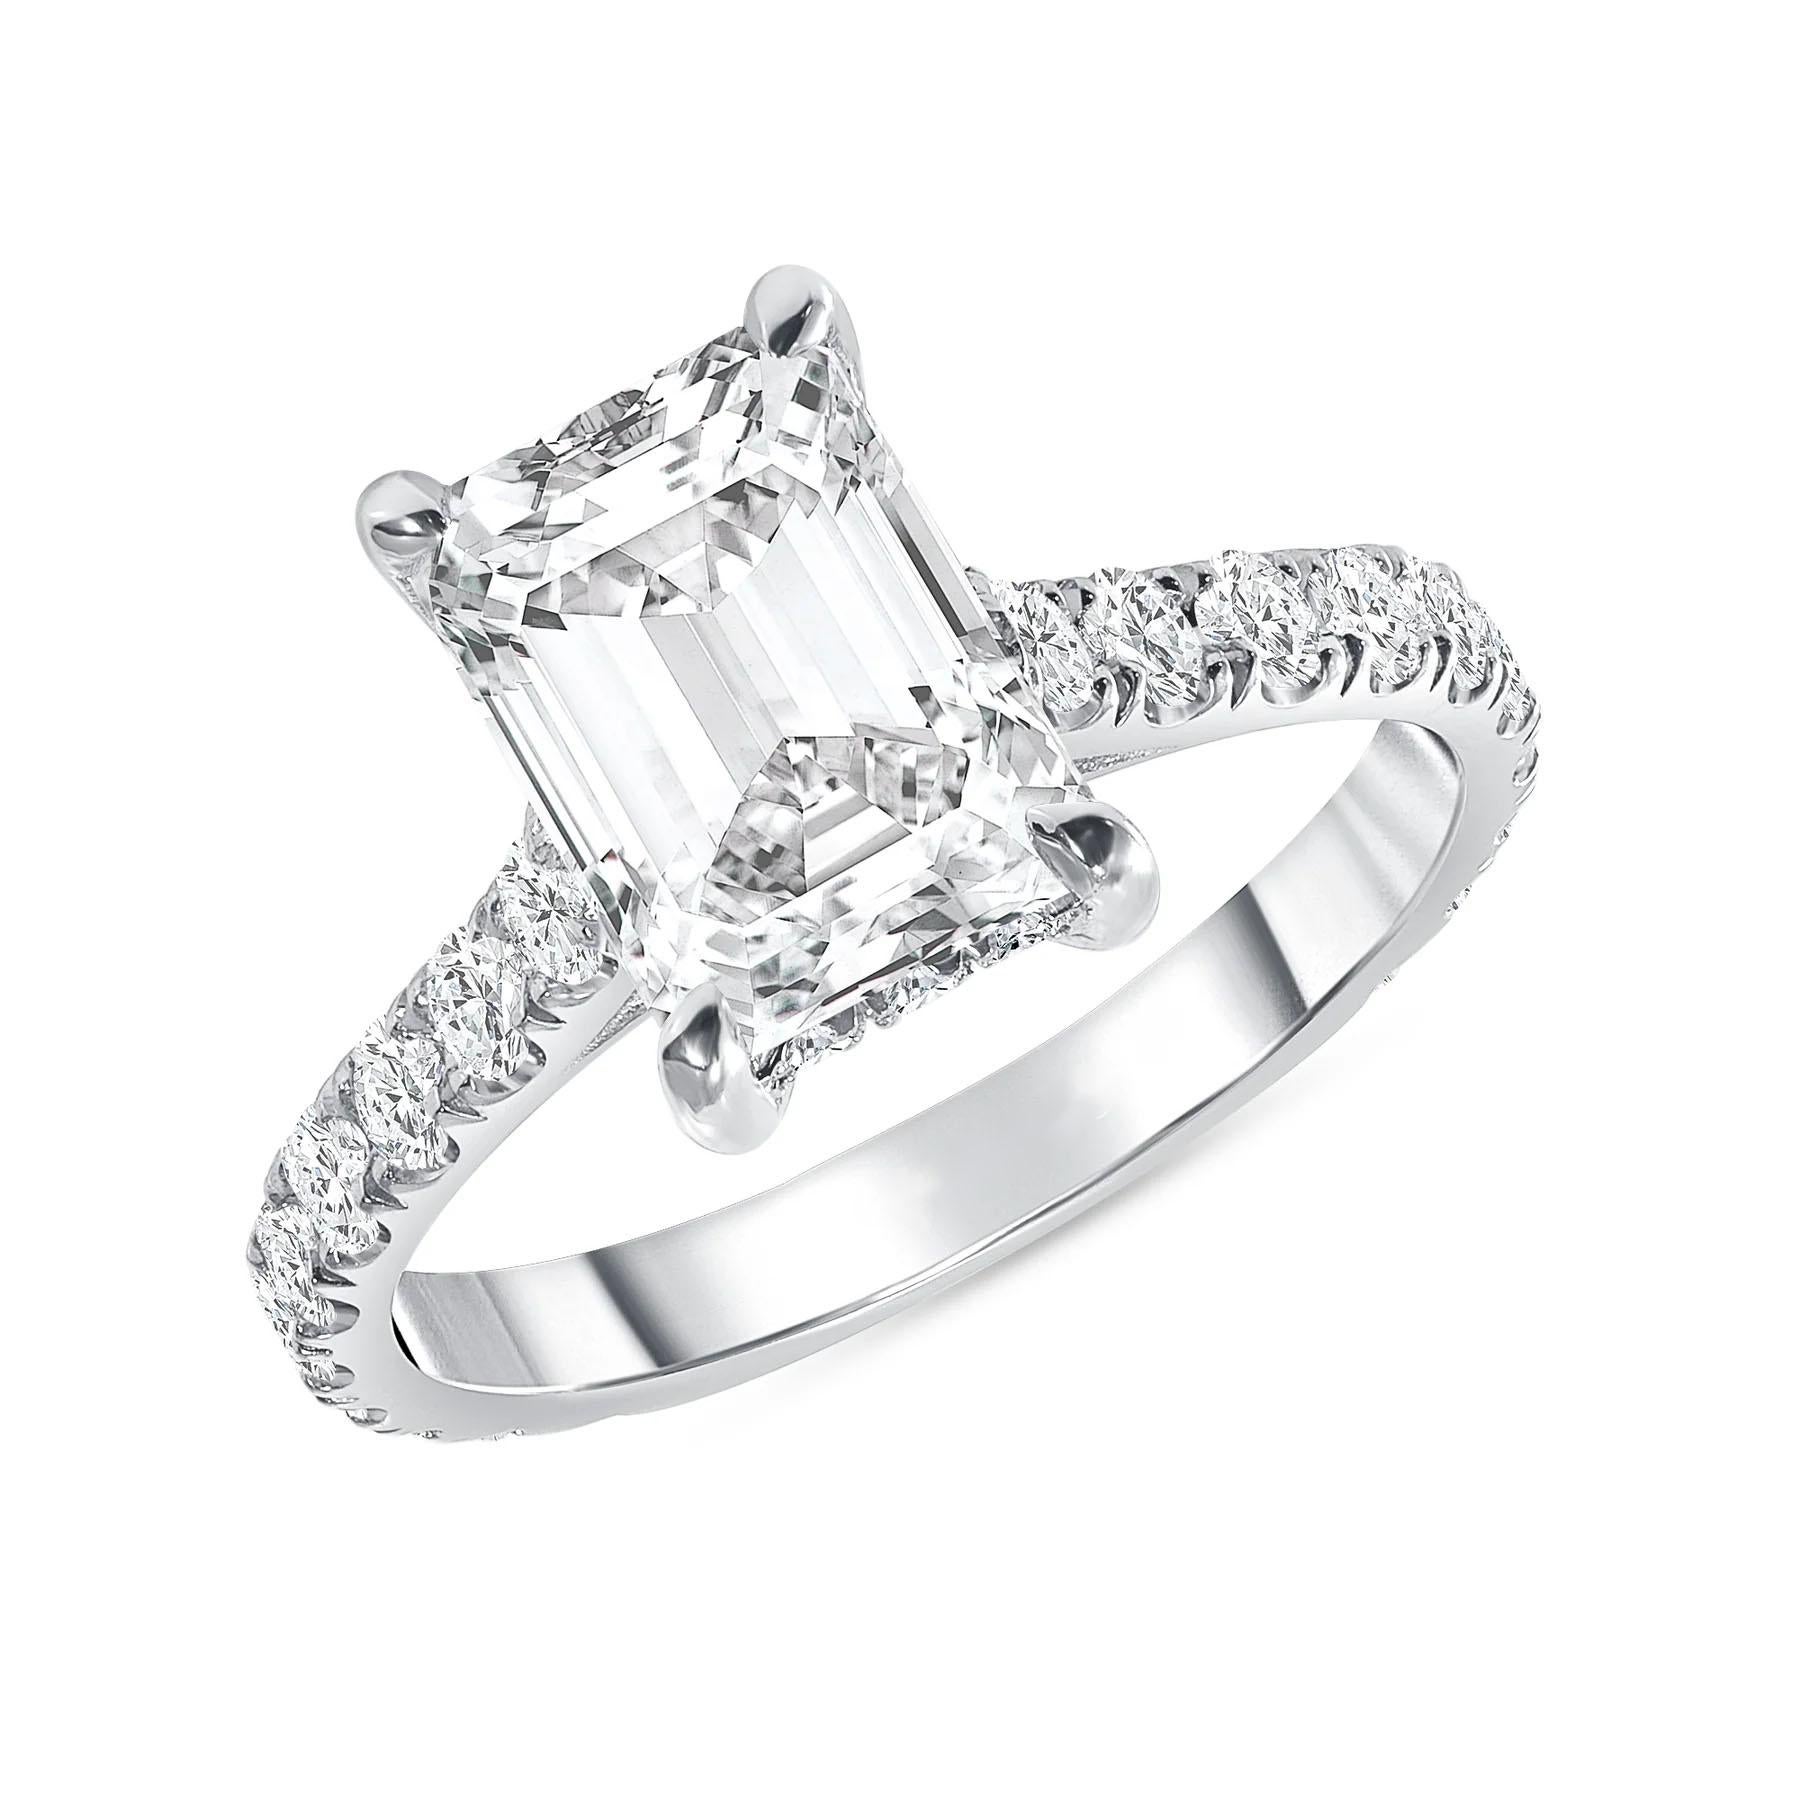 For Sale:  Averie's Engagement Ring Hidden Halo Setting 5